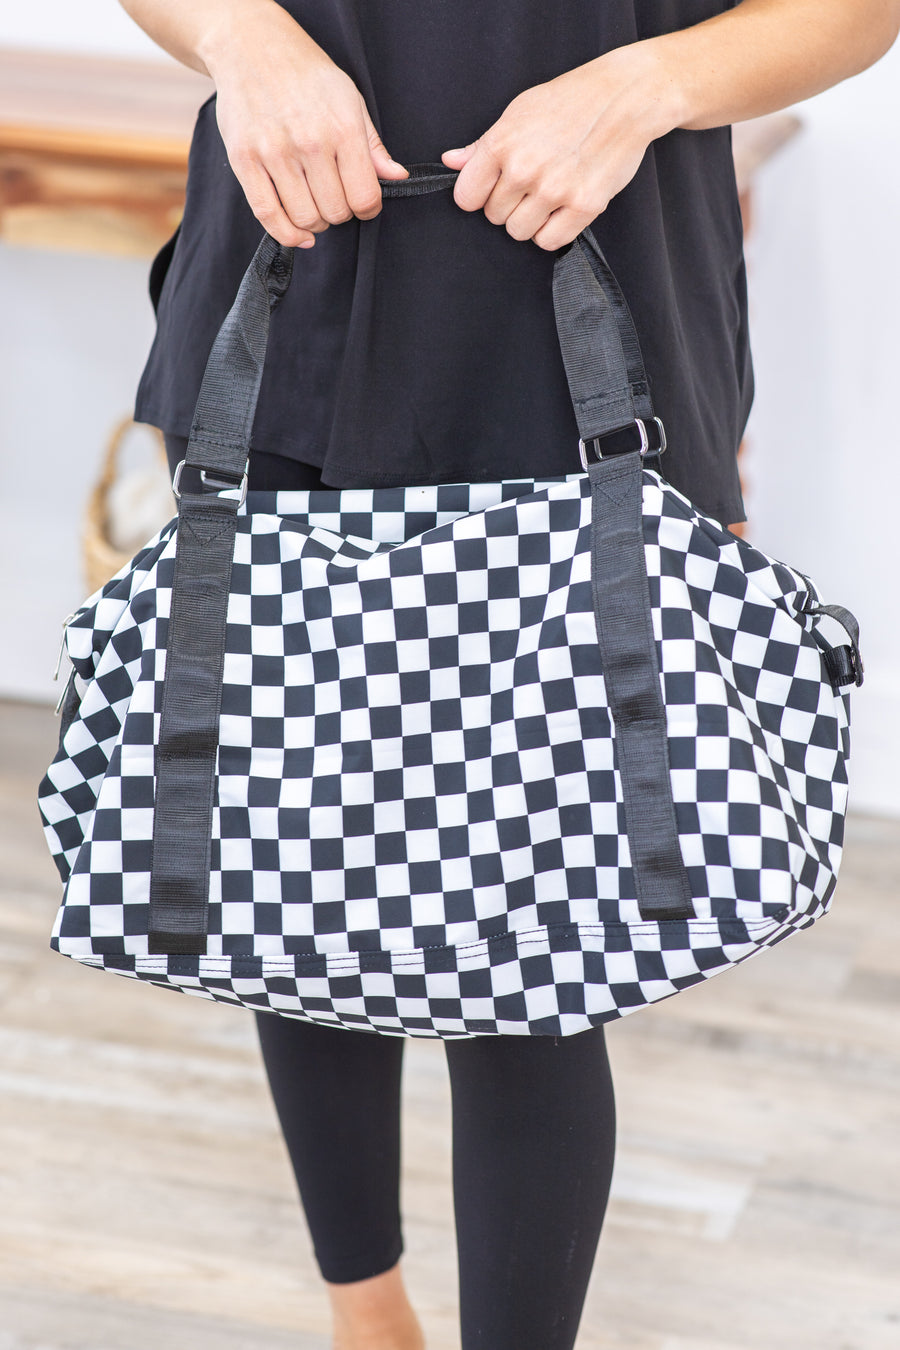 Black and White Checkered Travel Duffle Bag